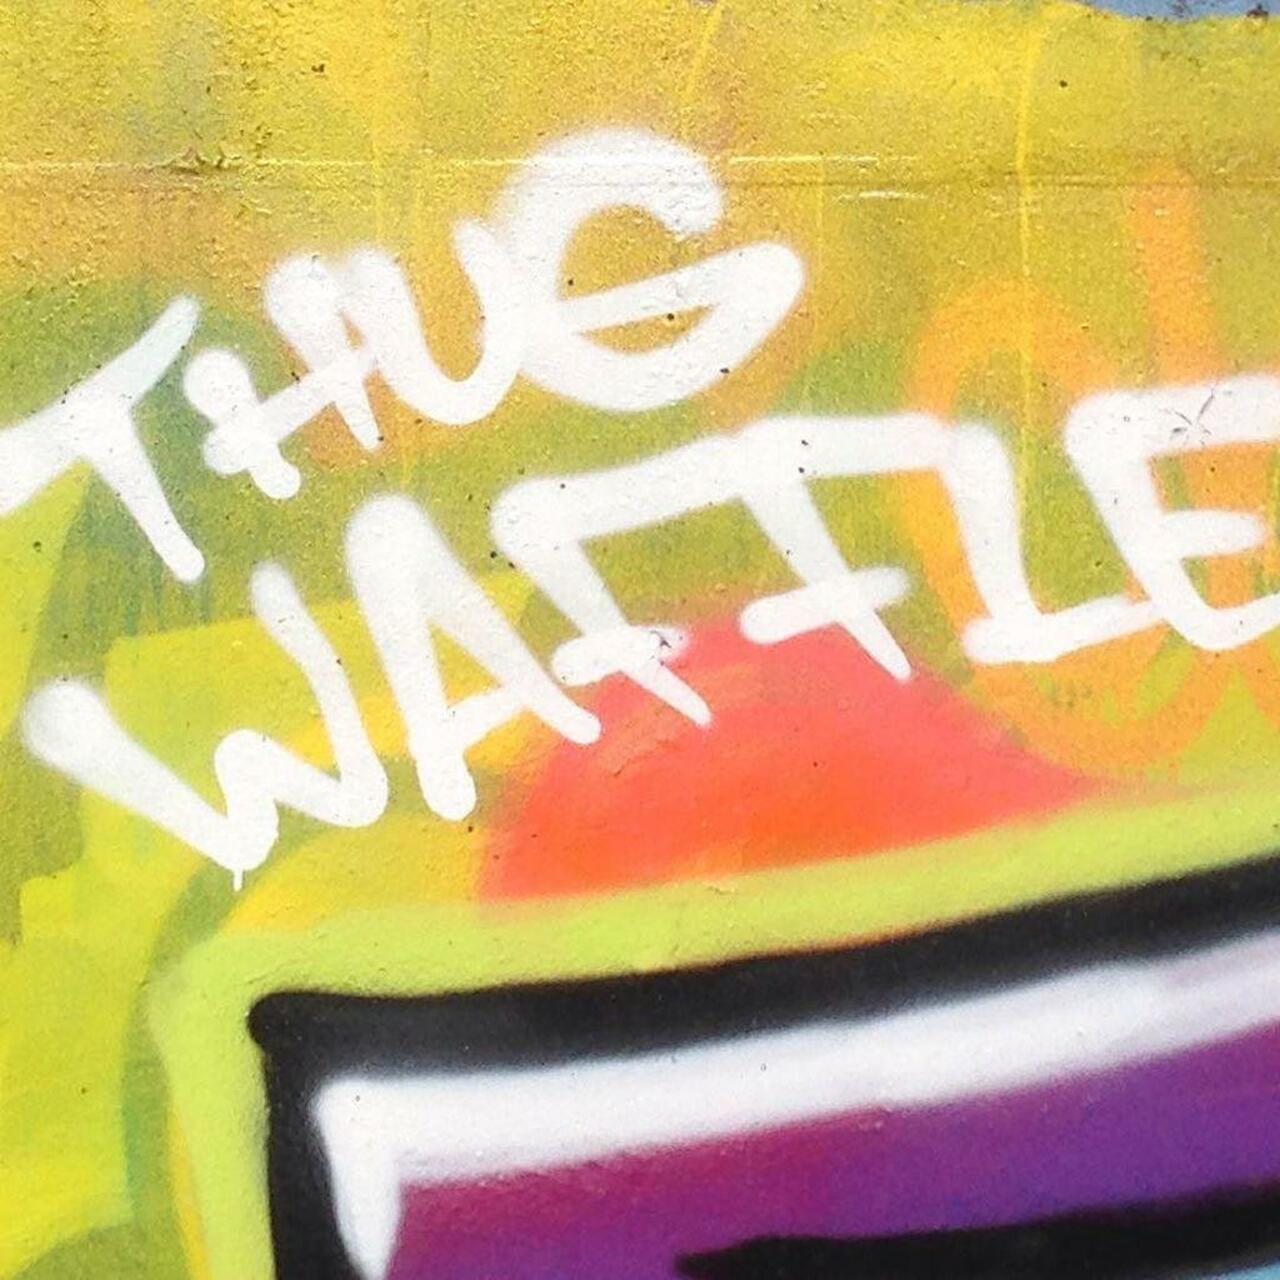 RT @pablowright: I kinda like the tag.
#graffiti #streetart #tagging #spraypaint #spraycan http://ift.tt/1WpKklY http://t.co/JKtEq8awBO